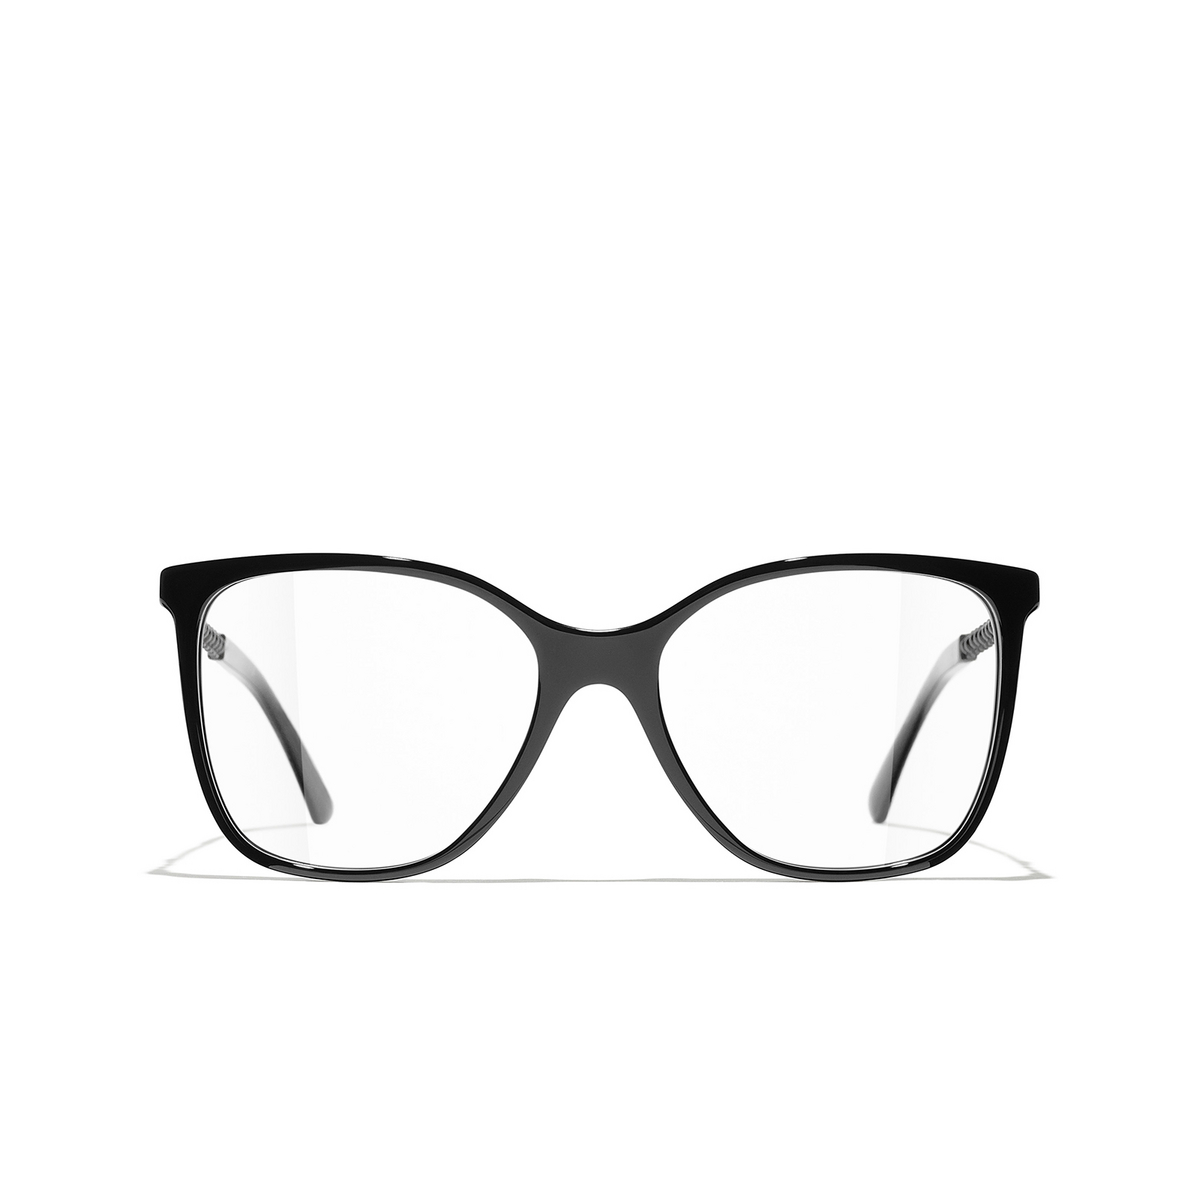 CHANEL square Eyeglasses C888 Black - front view